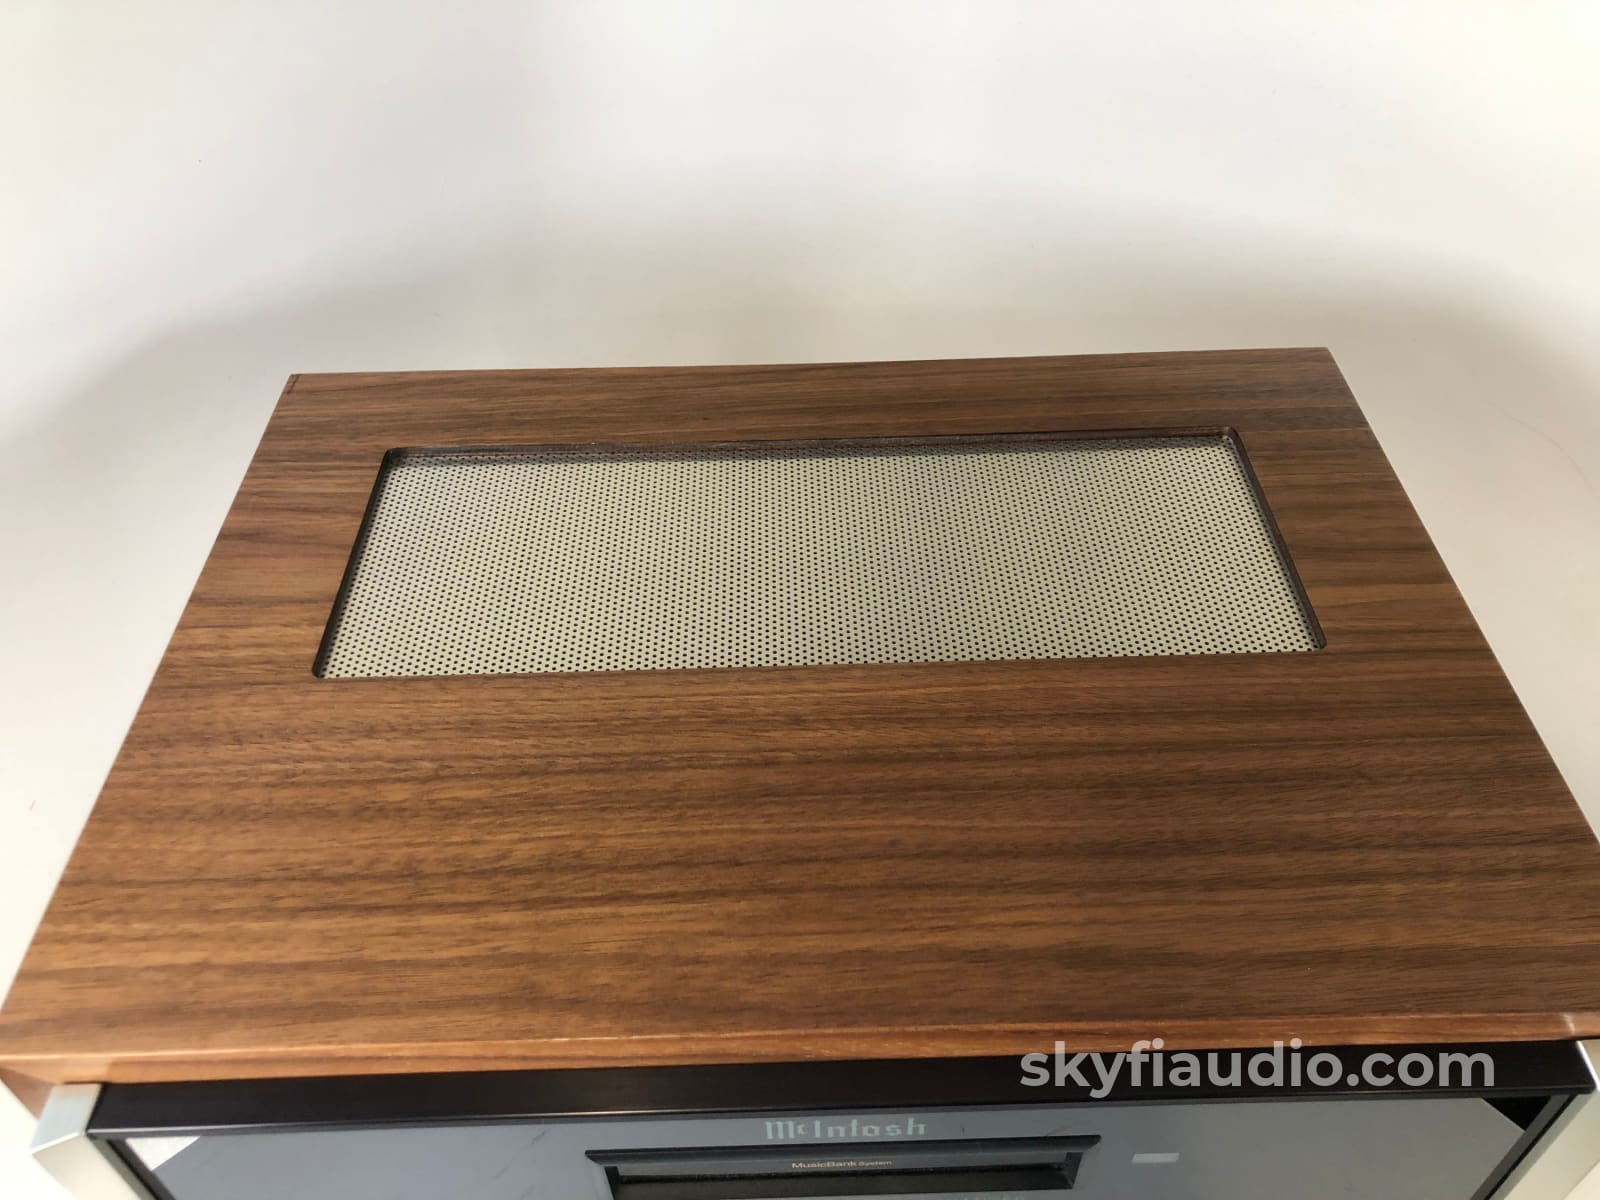 Mcintosh Mcd205 Cd Changer In Custom Walnut Wood Case + Digital